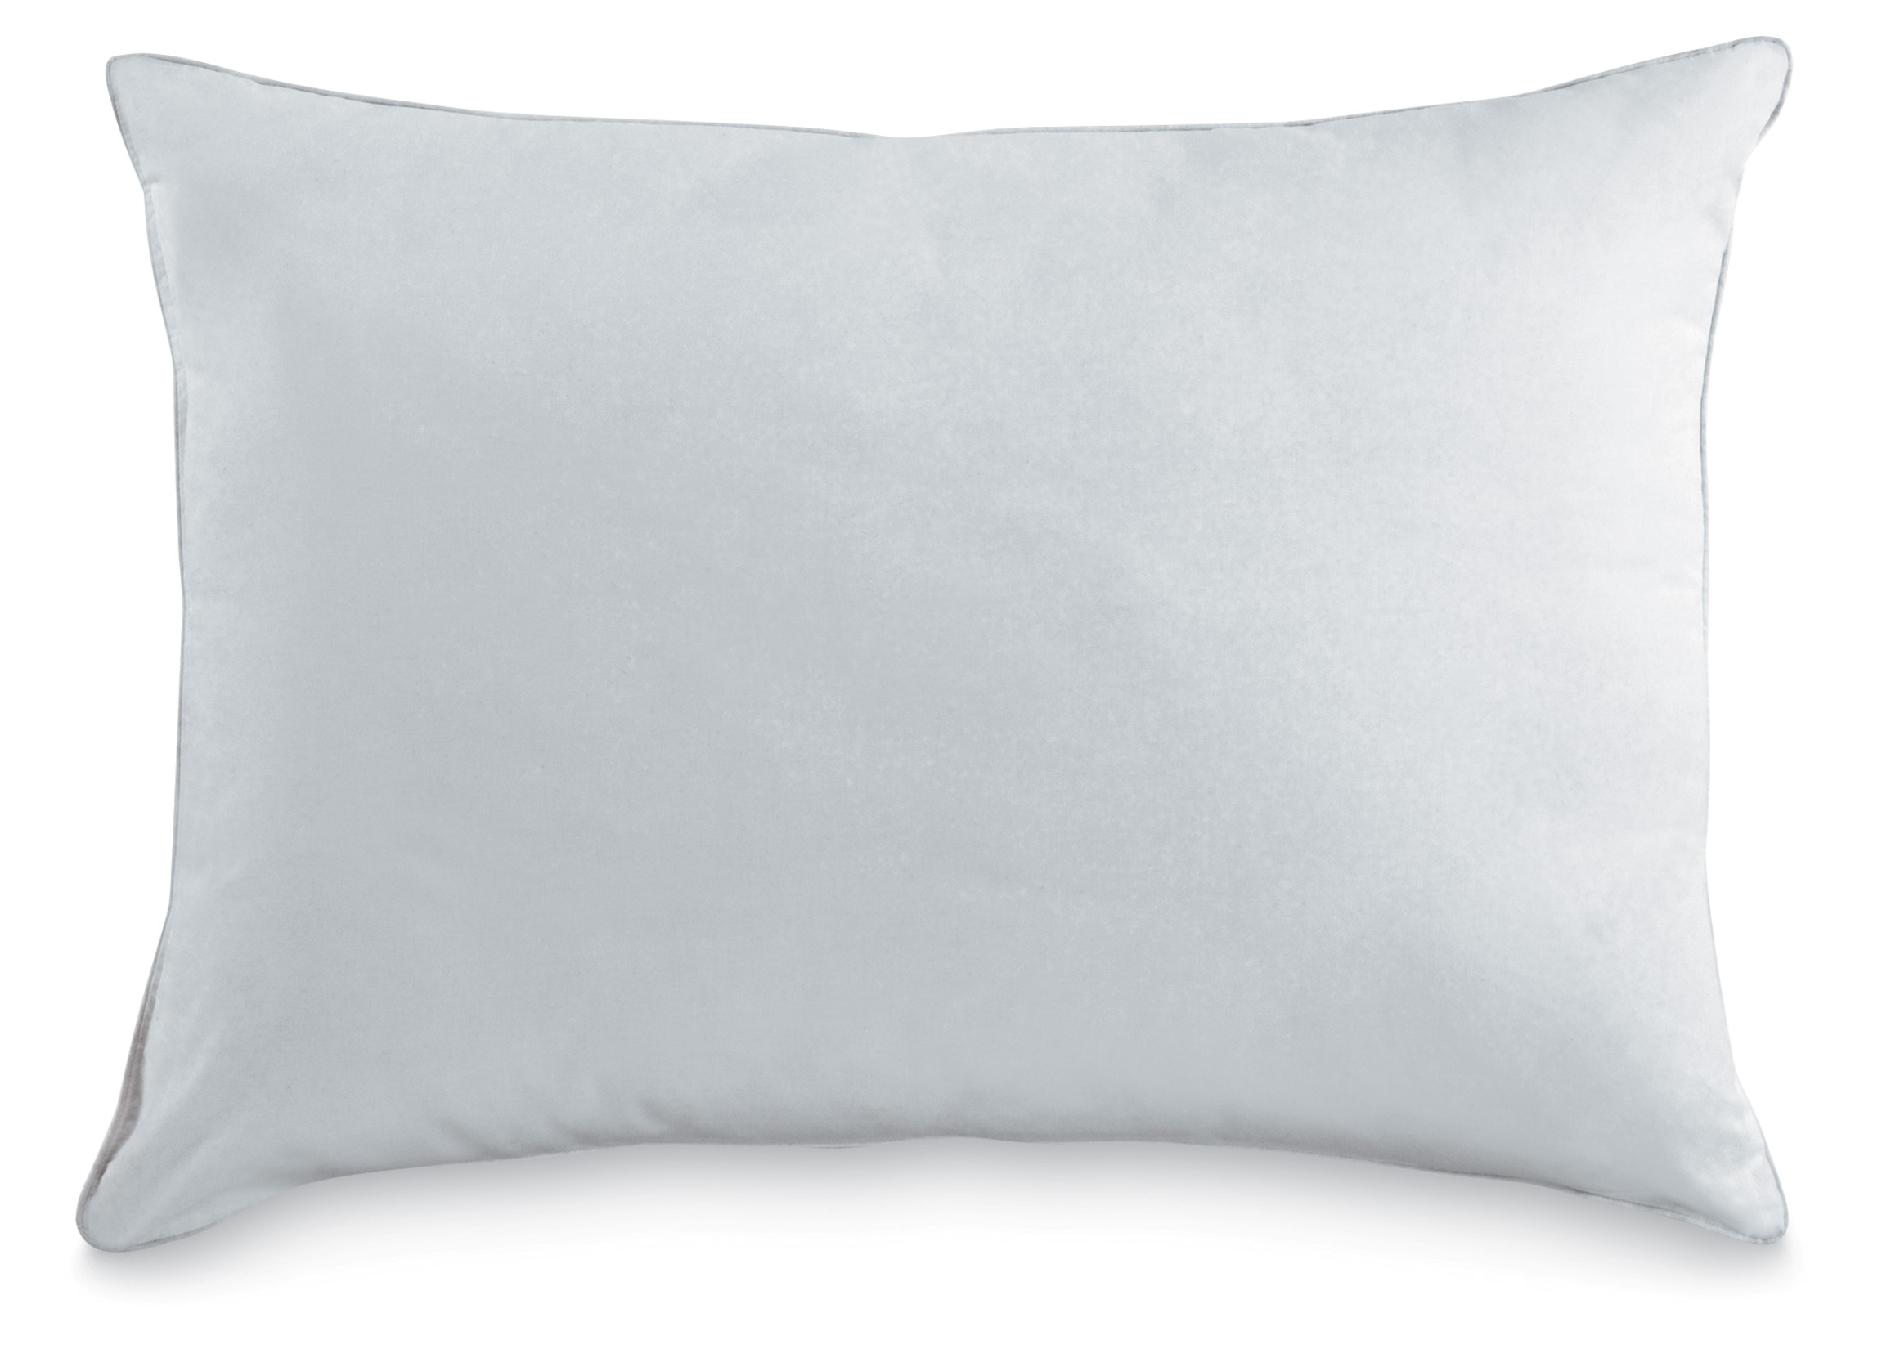 Cannon Allergen Free Standard/Queen Pillow